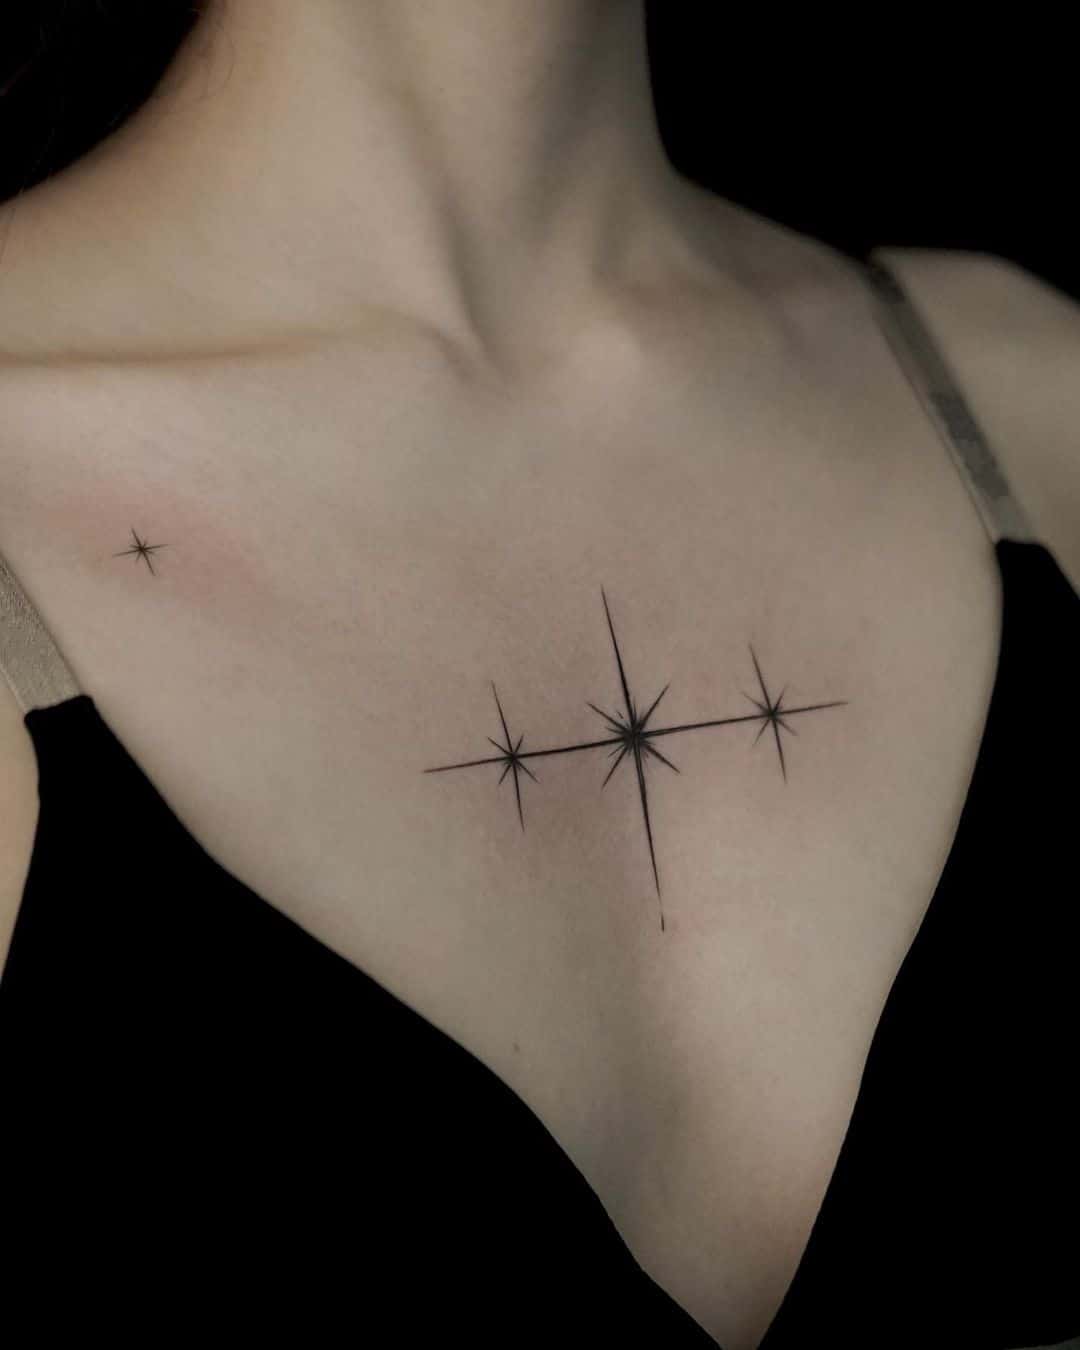 Star tattoo on chest by senseforce.flu